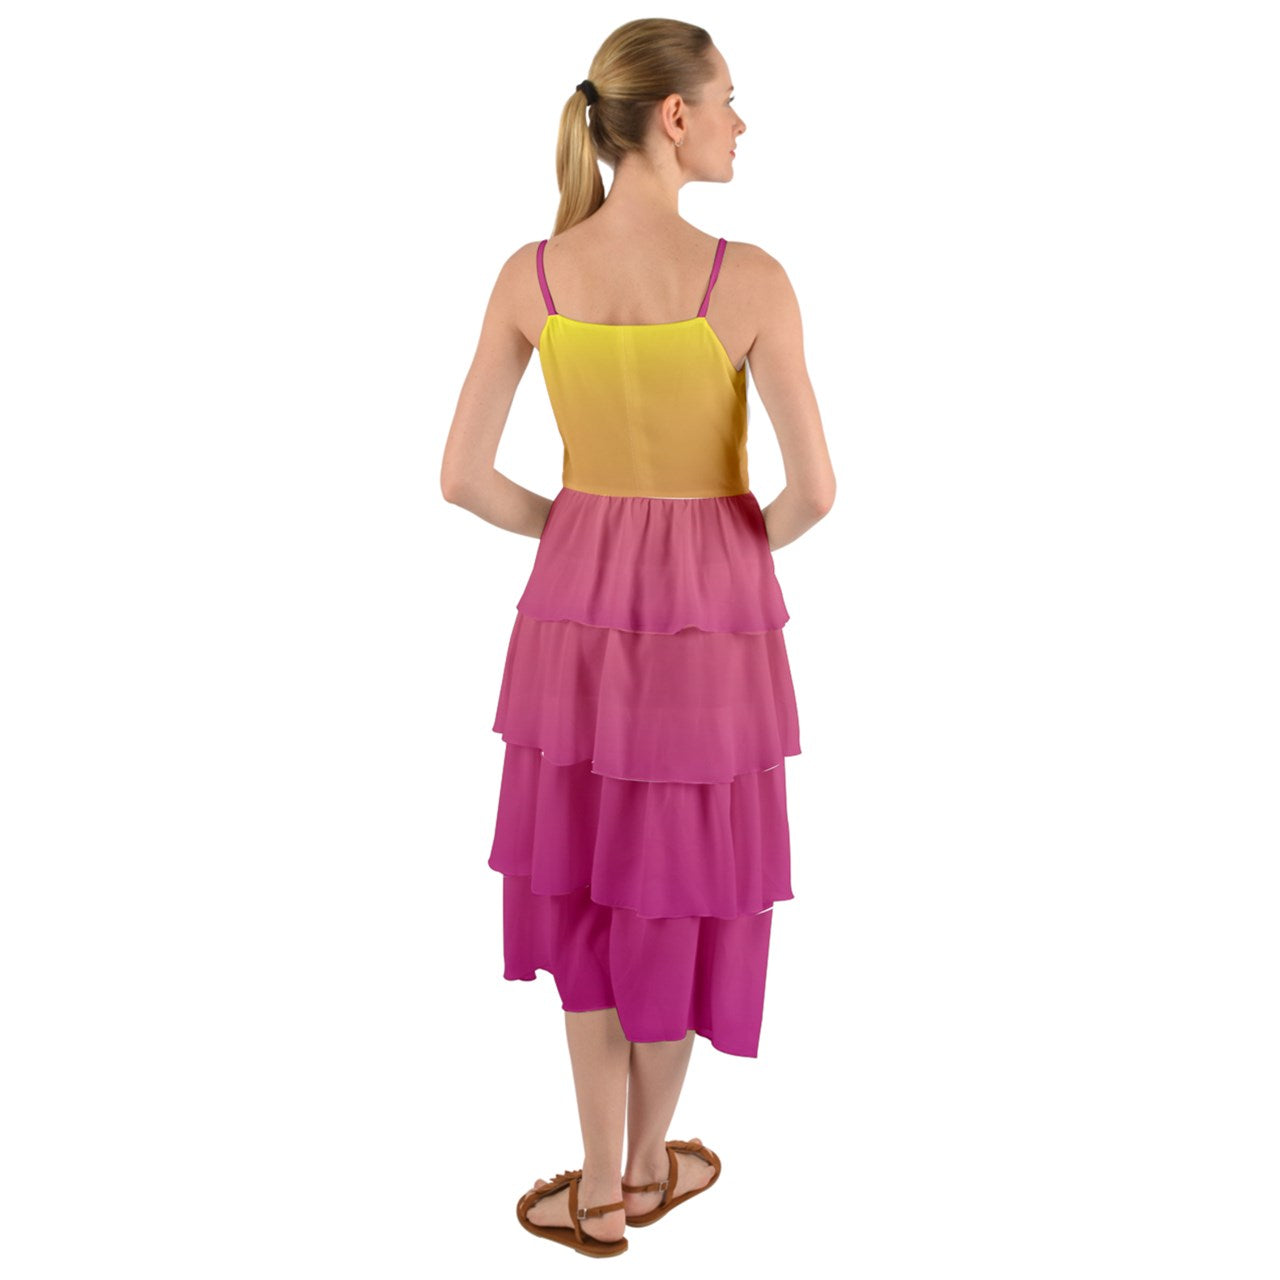 Magenta Sunset Ombre Boho Ruffle Dress: Tropical Elegance Meets Bohemian Flair